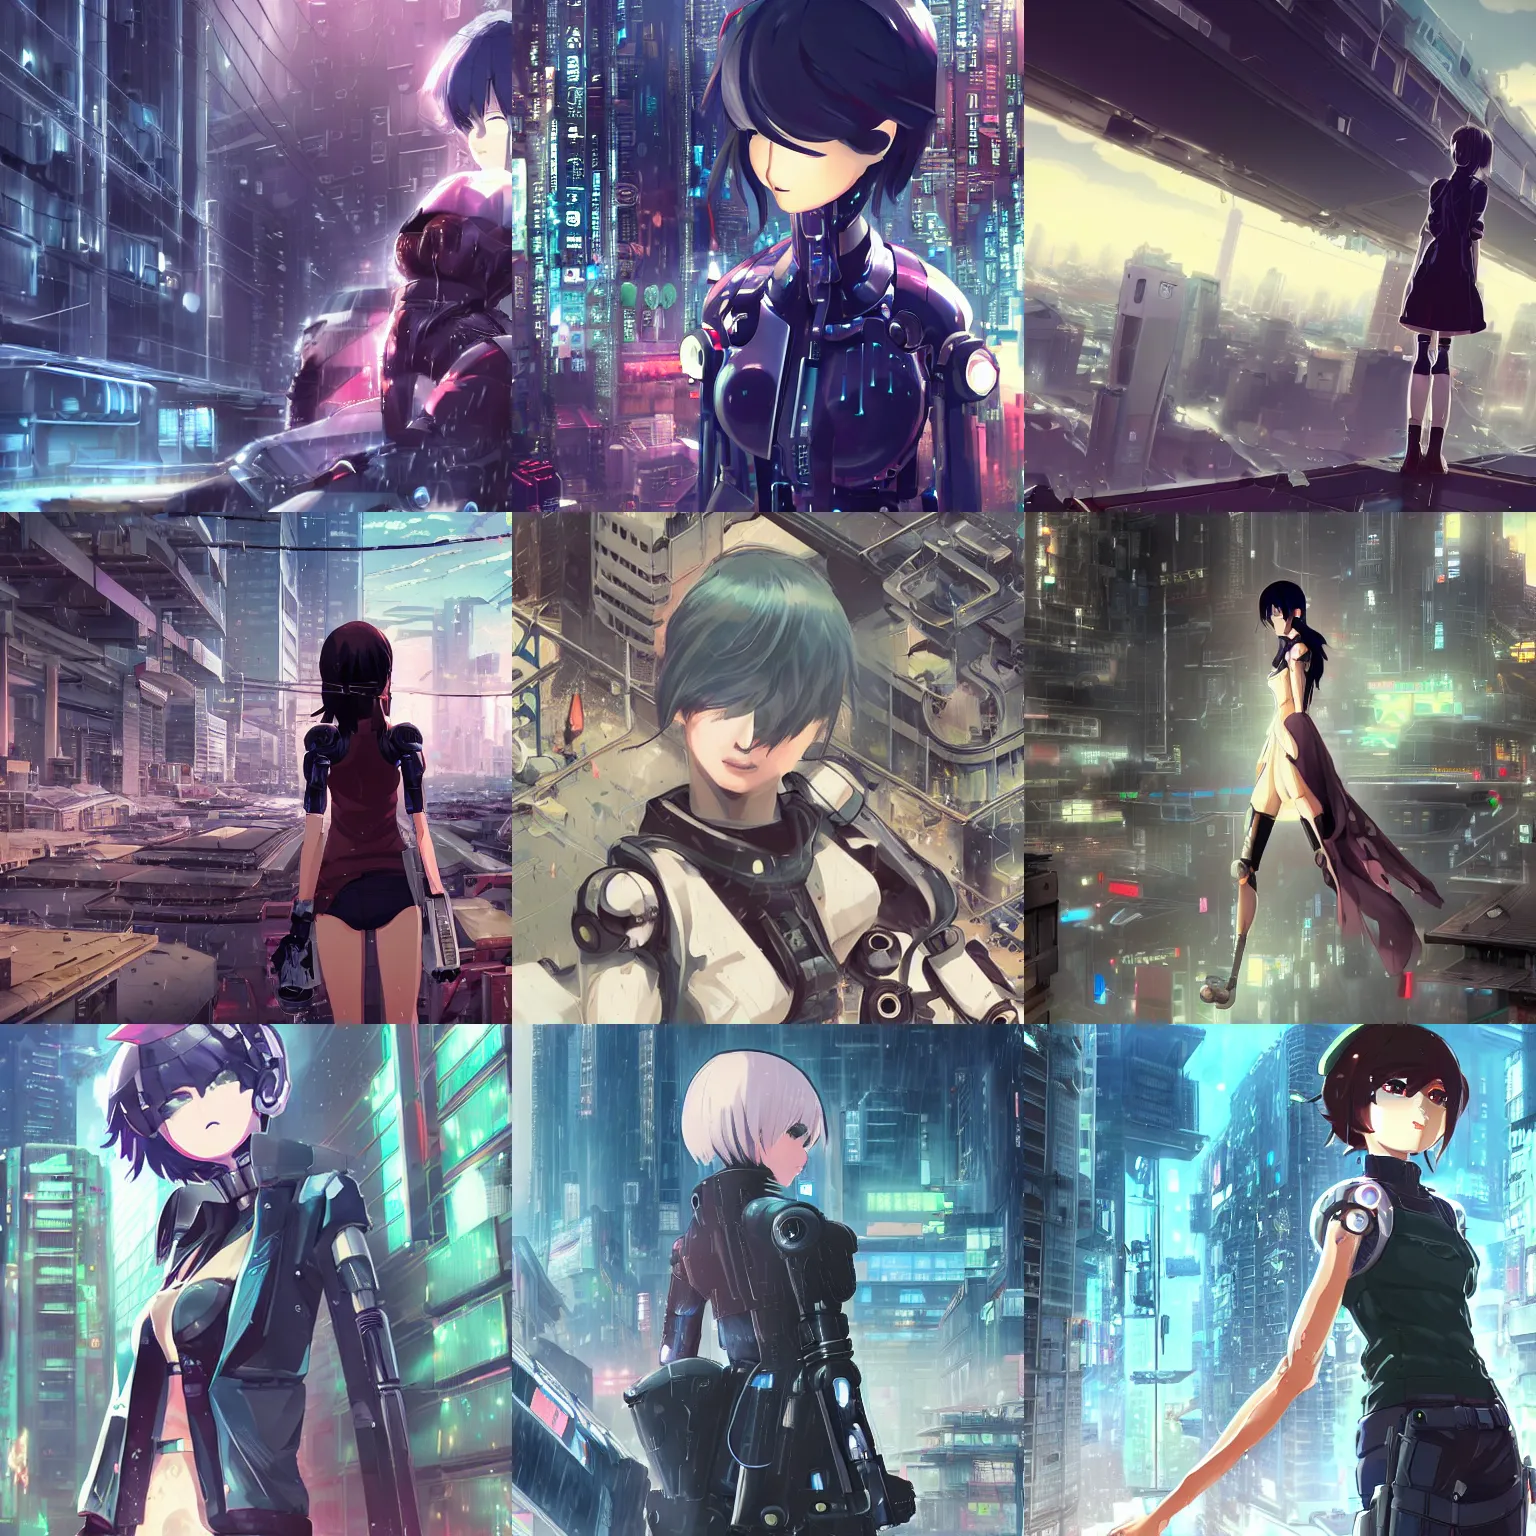 Prompt: android mechanical cyborg girl in overcrowded urban dystopia gigantic future city raining makoto shinkai wide angle